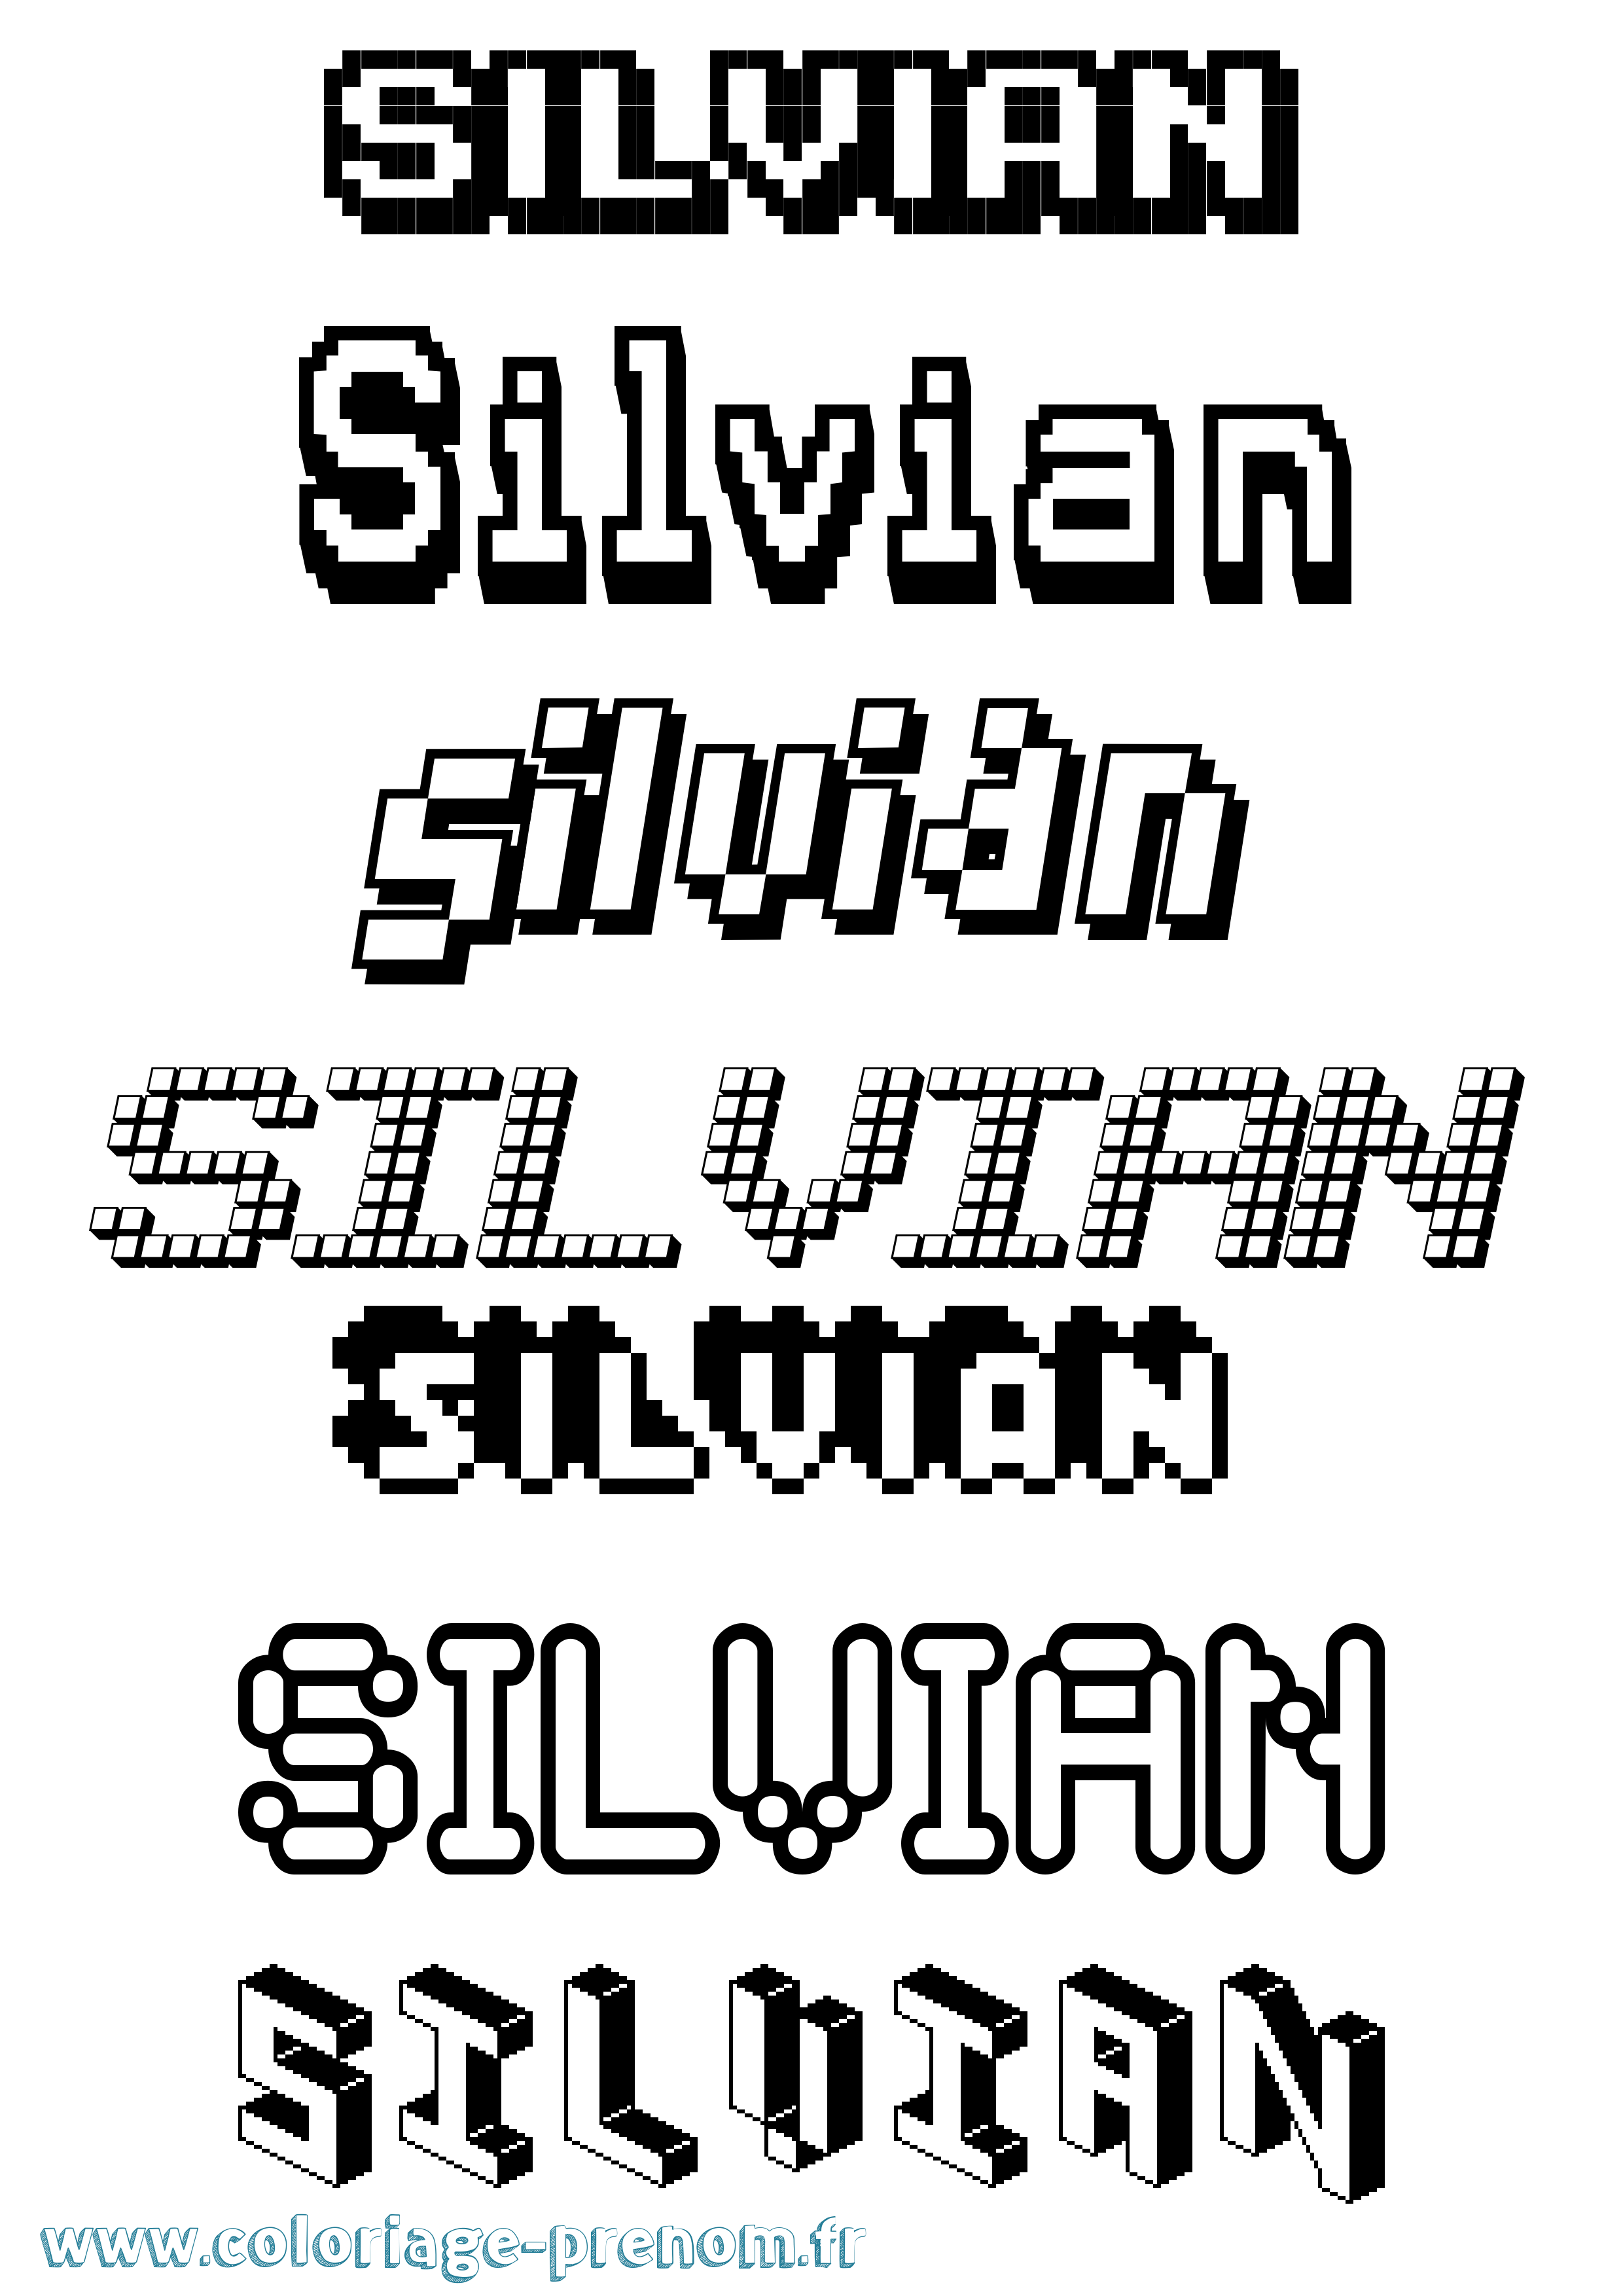 Coloriage prénom Silvian Pixel